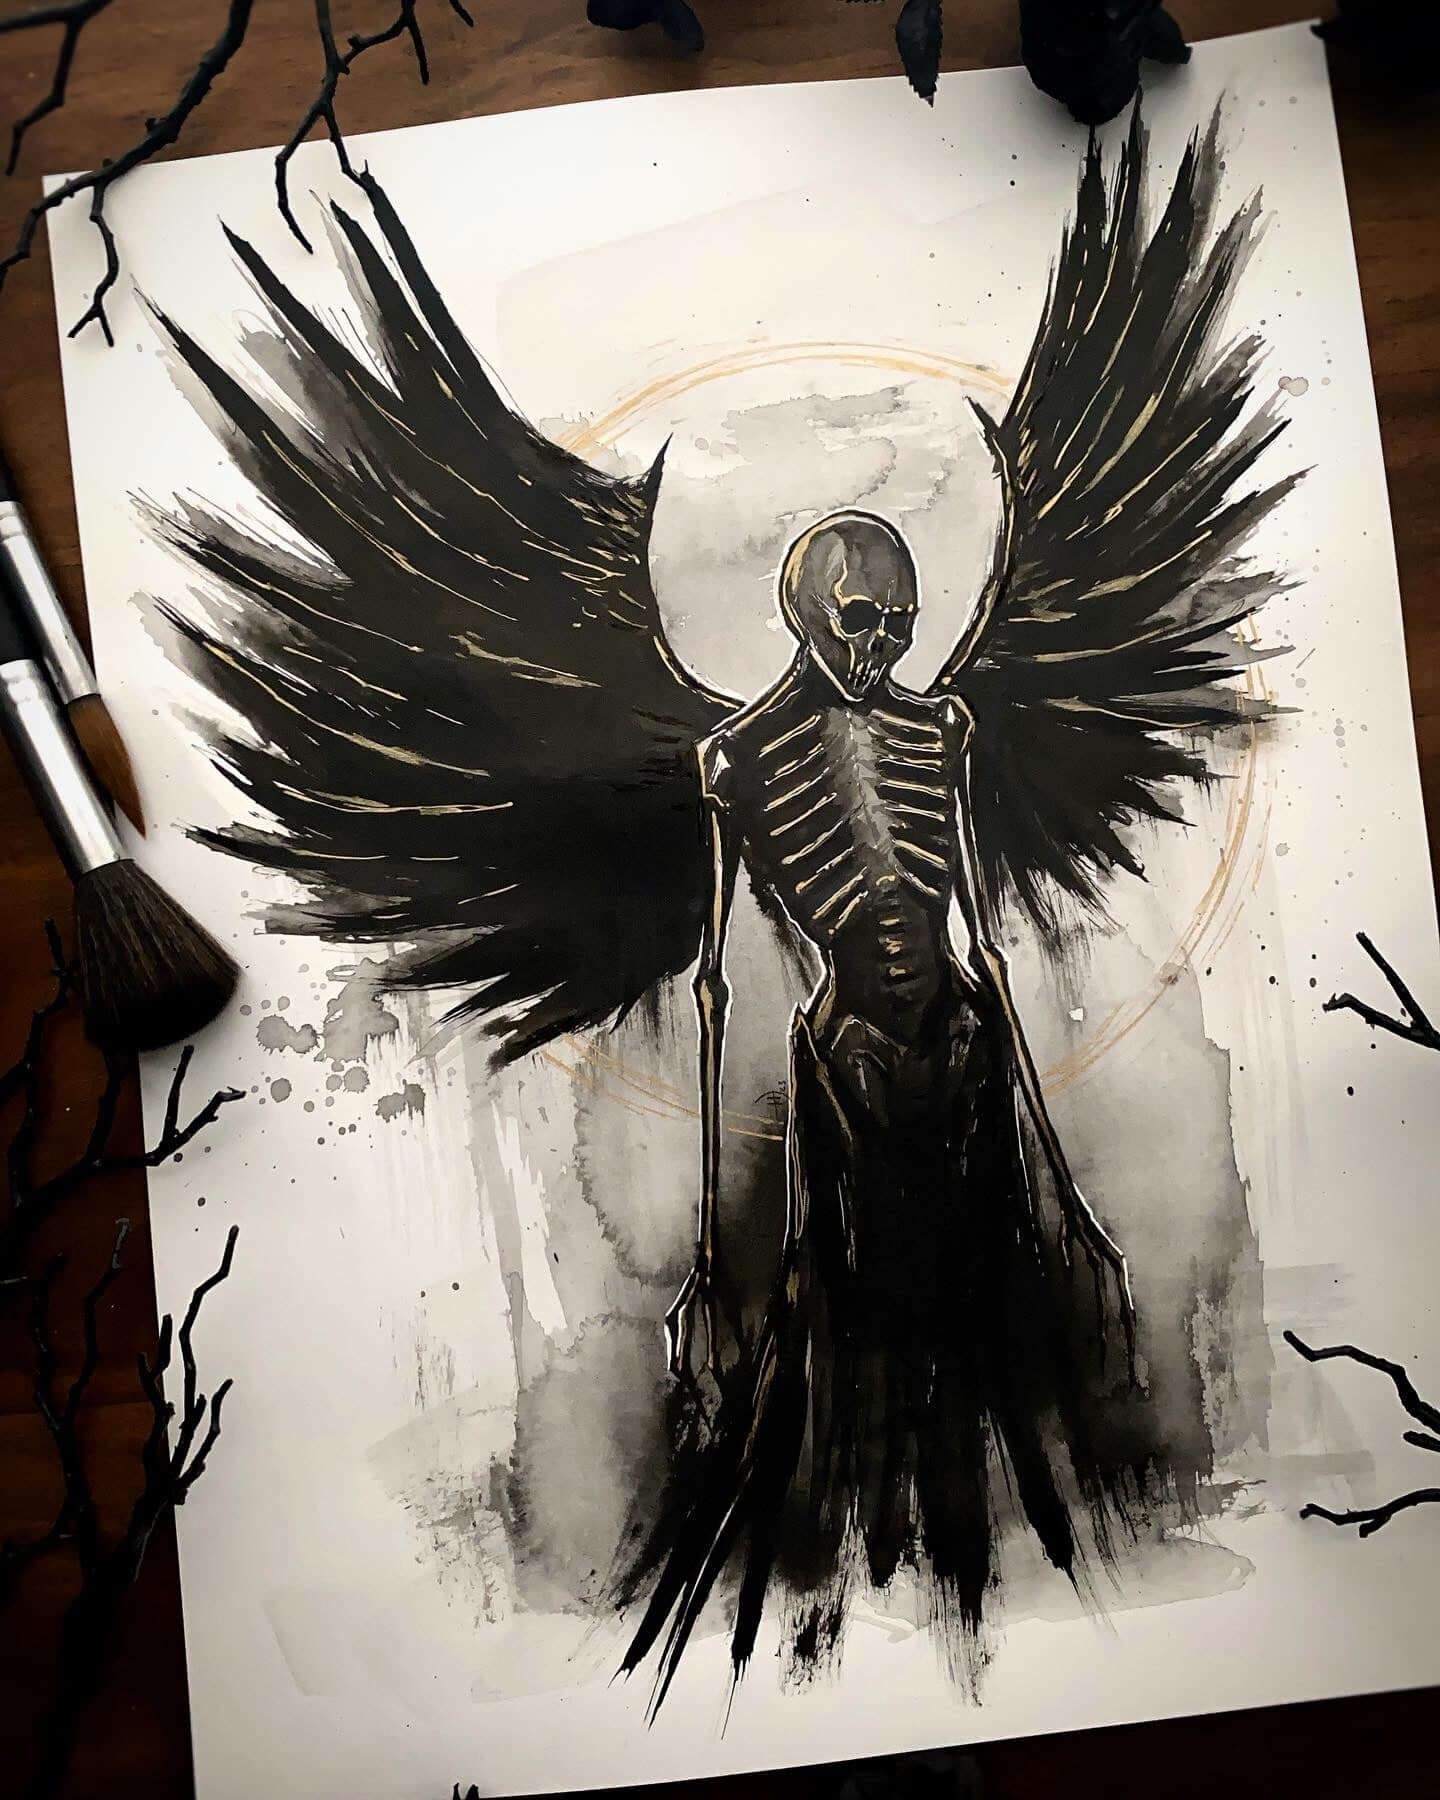 Angel of Death